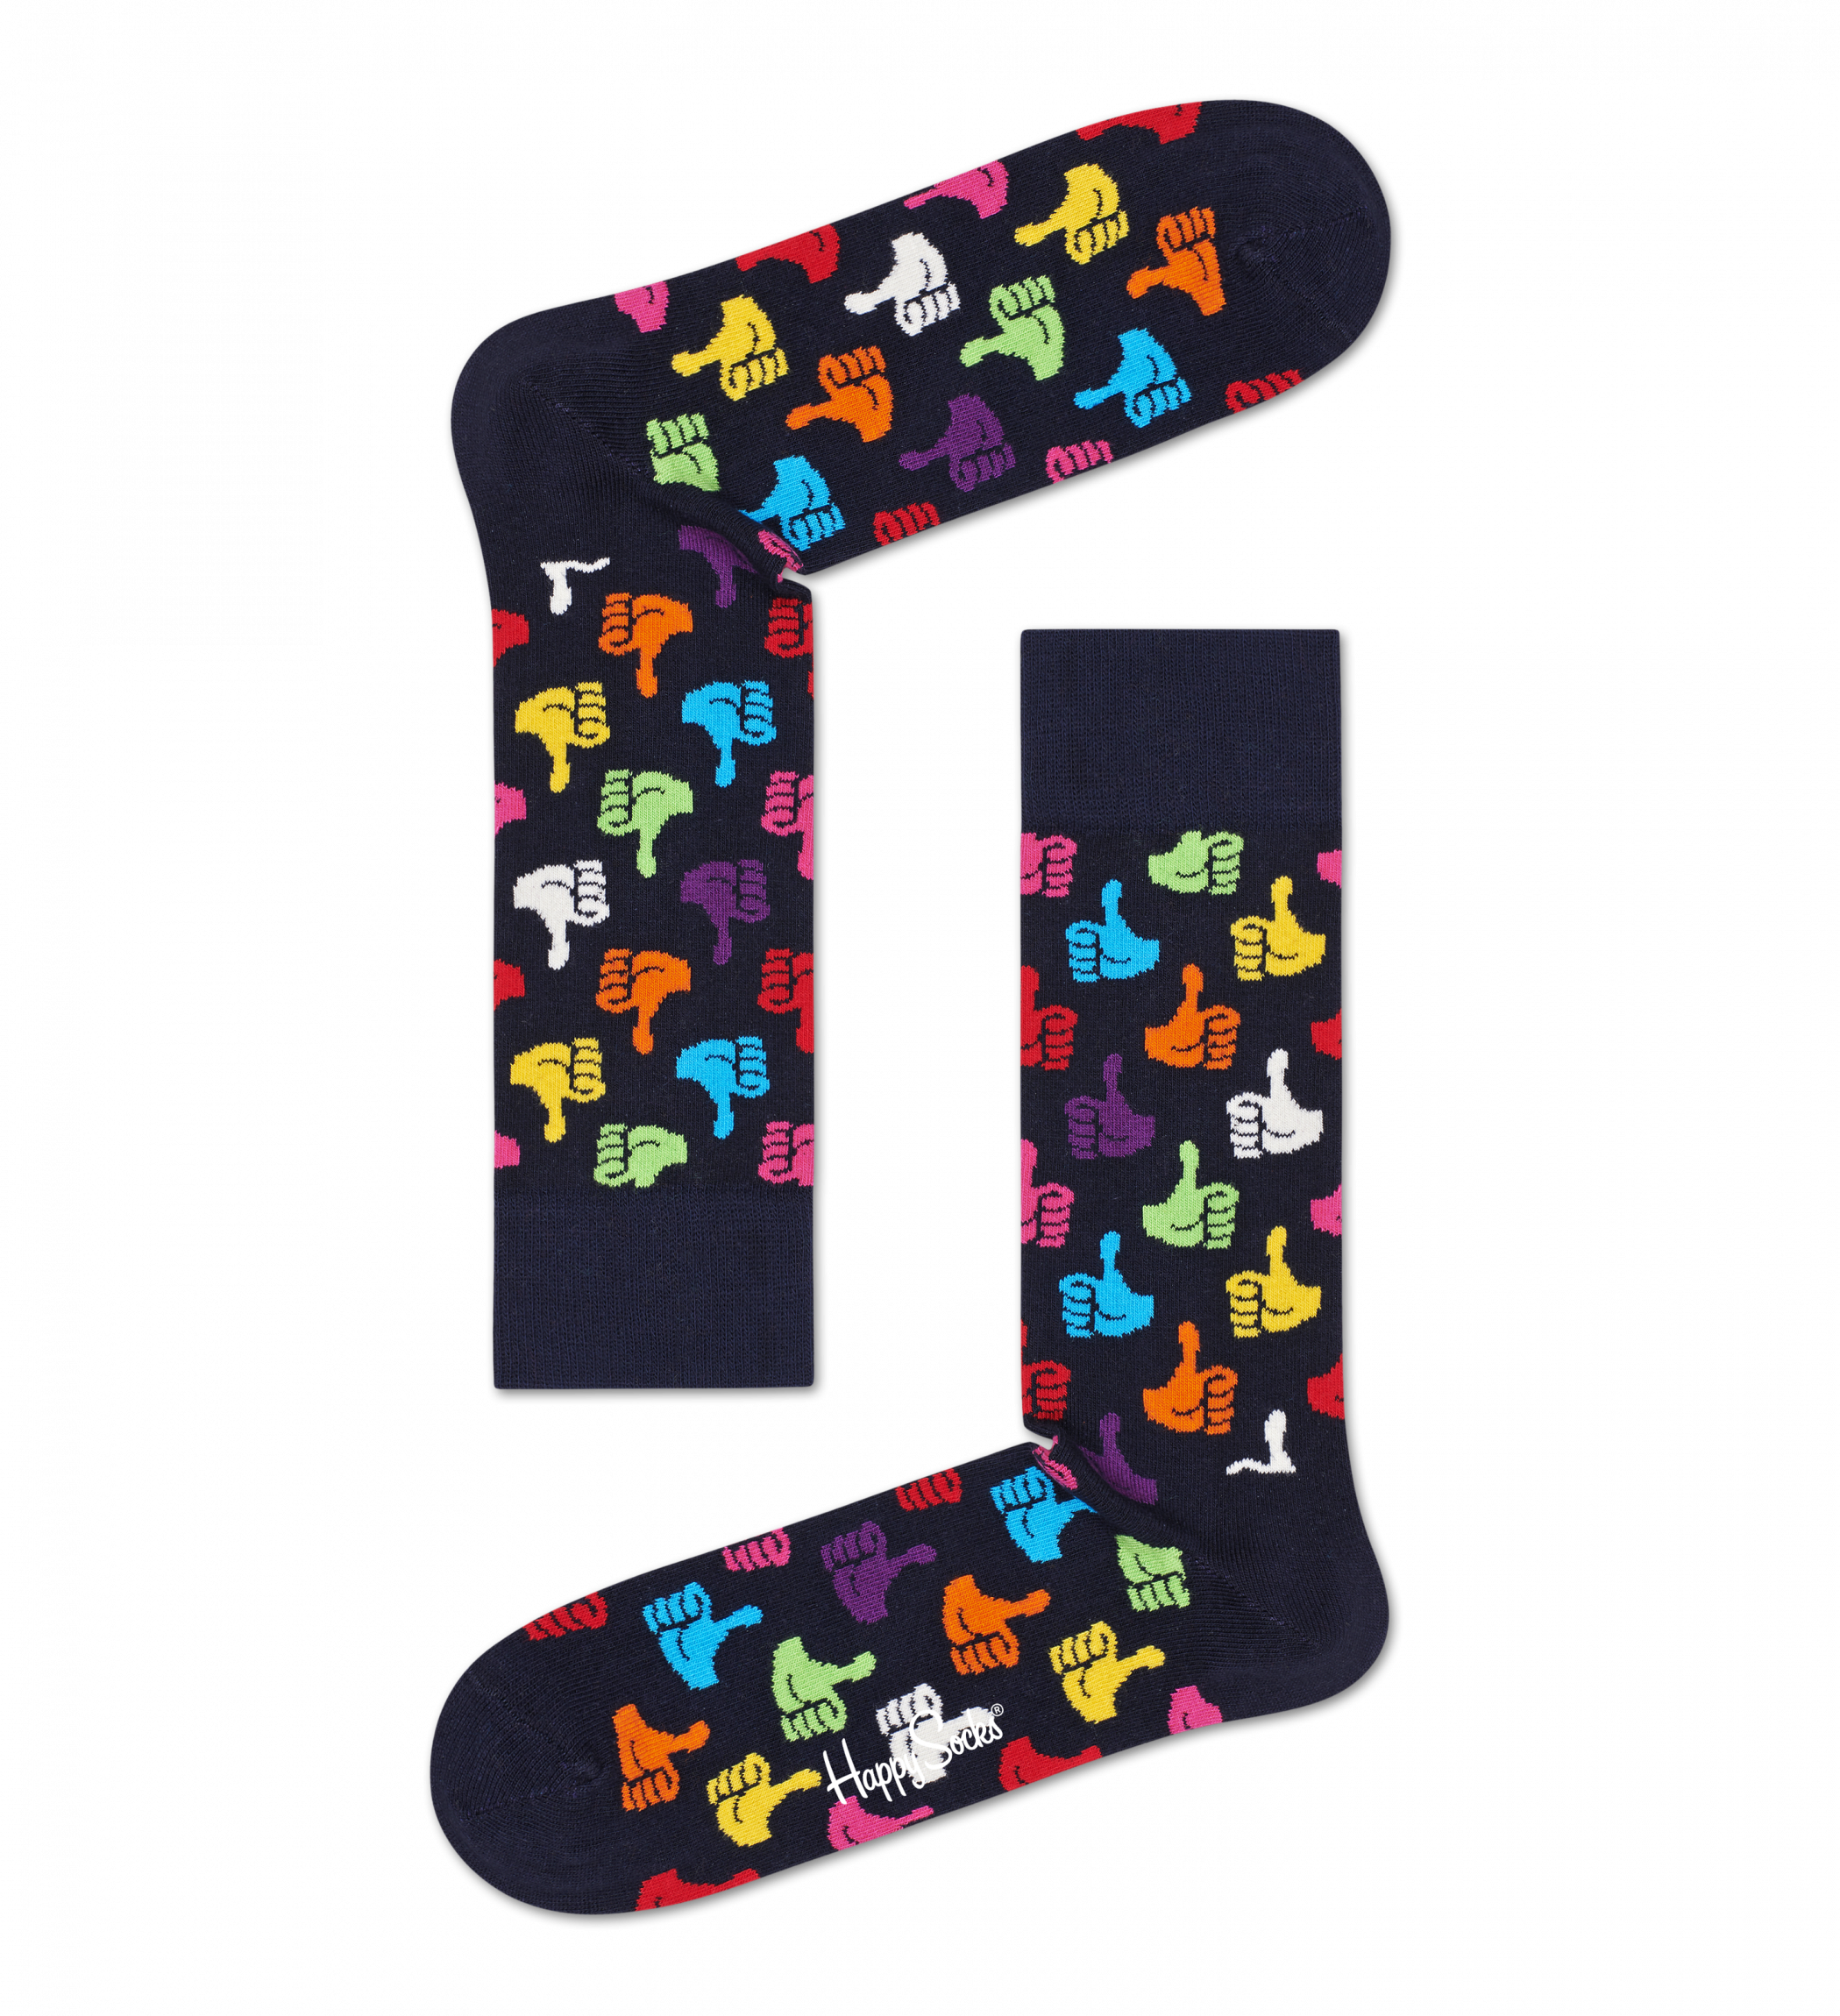 Černé ponožky Happy Socks s palci, vzor Thumbs Up